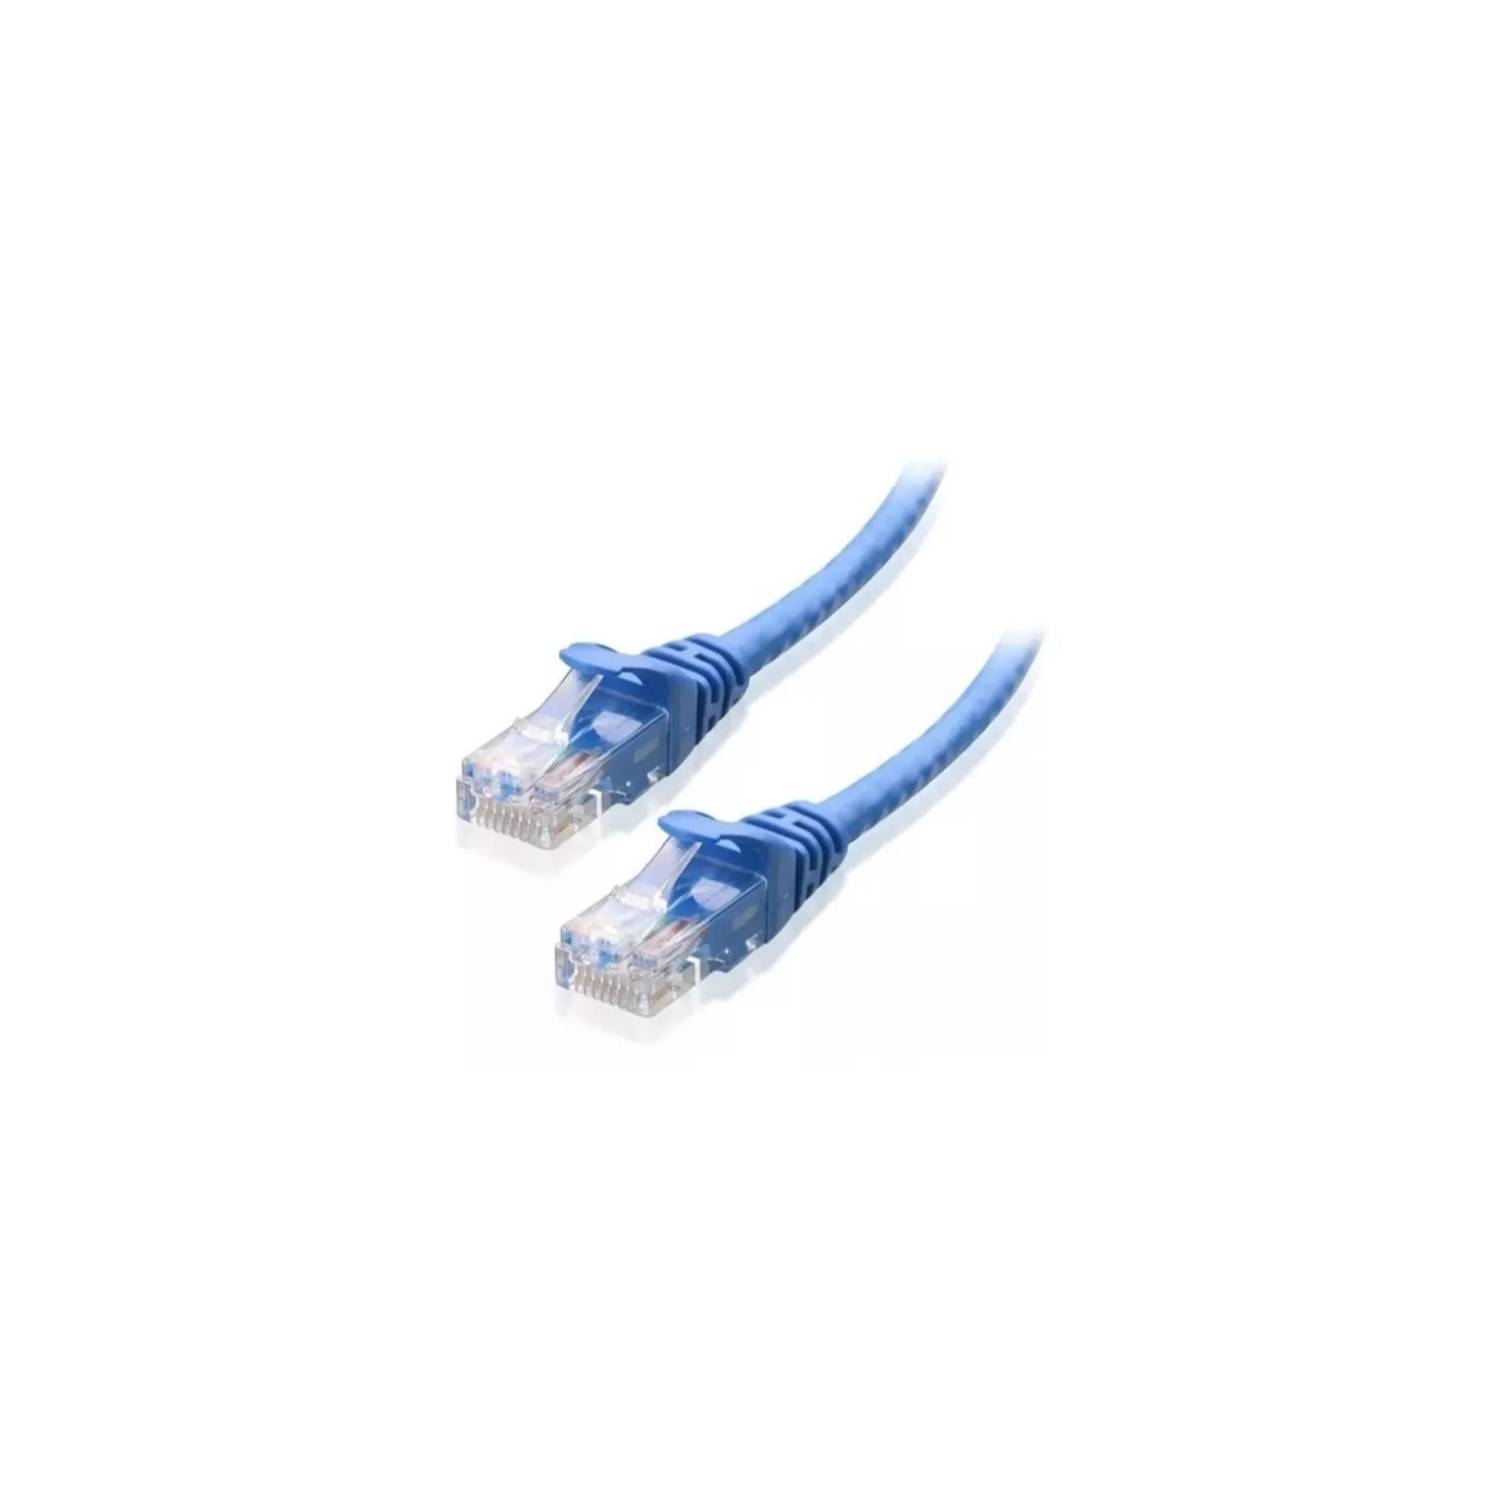 Cable Utp Gigabit Red Internet Ponchado 15 Metros – Tienda Online